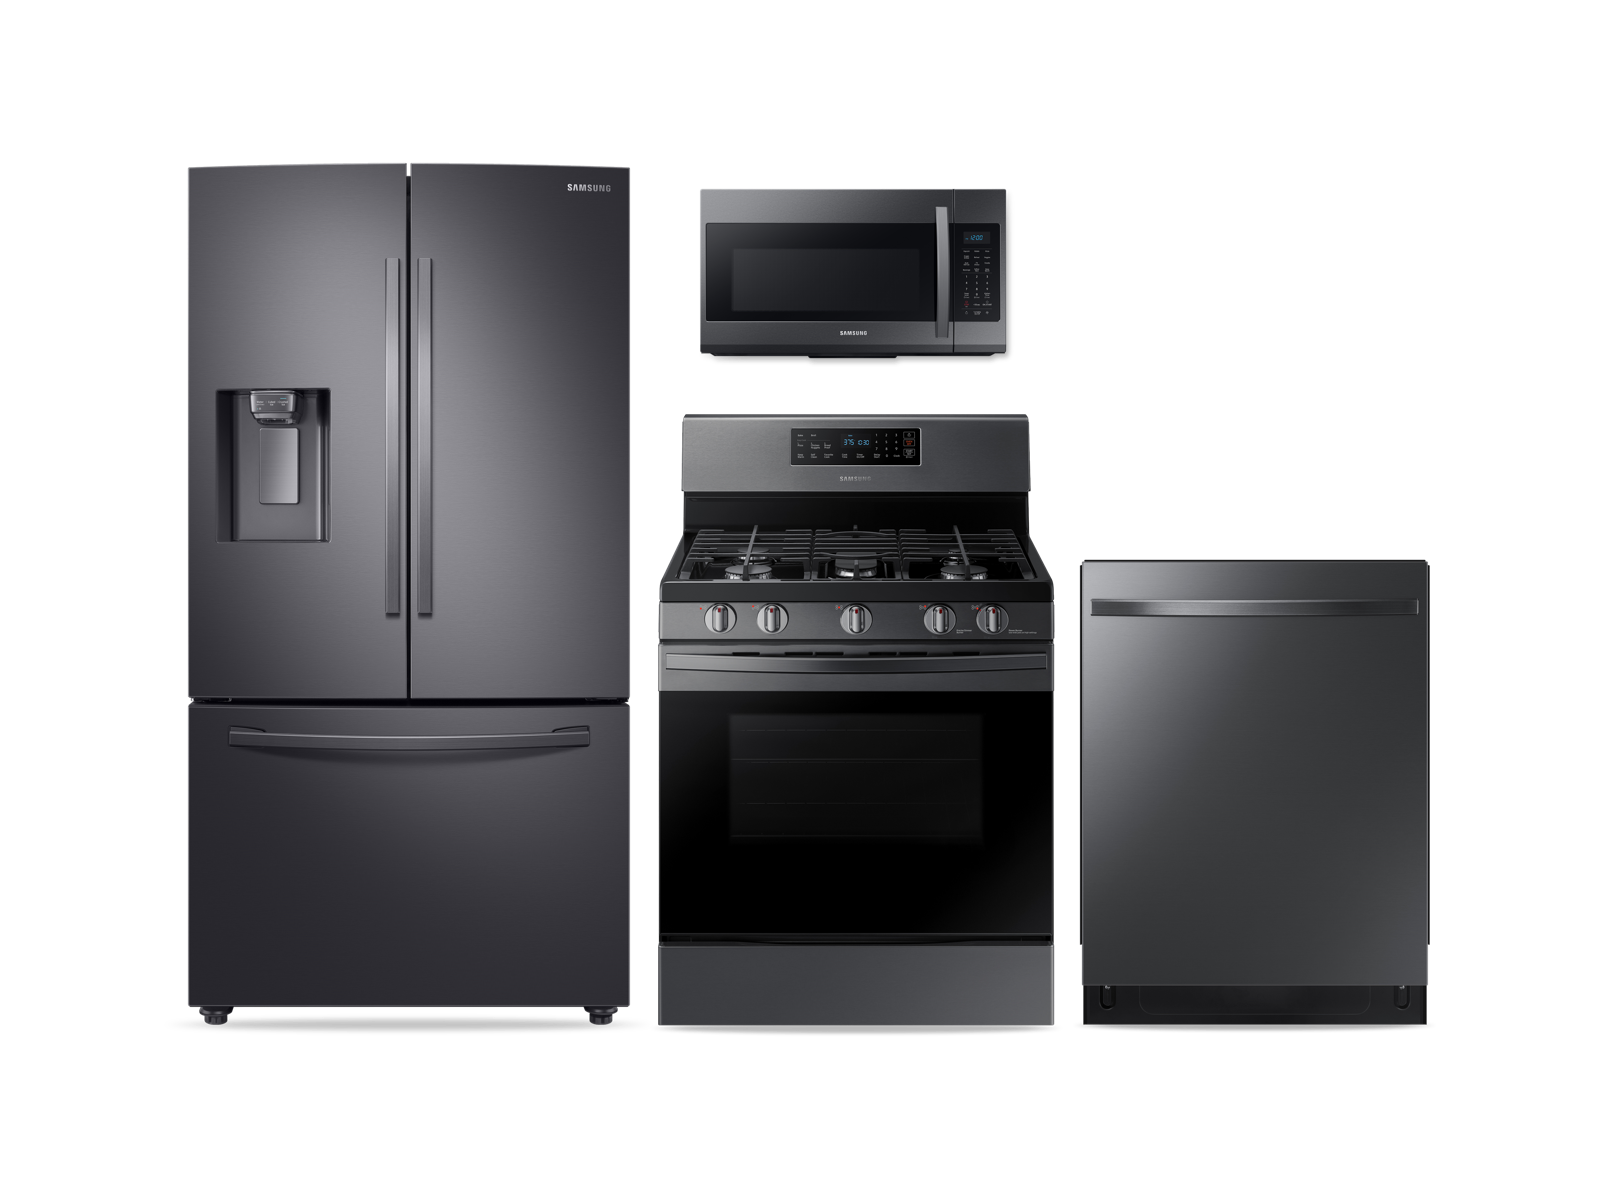 Large Capacity 3-door Refrigerator + Gas Range + StormWash Dishwasher + Microwave Kitchen Package in Black Stainless